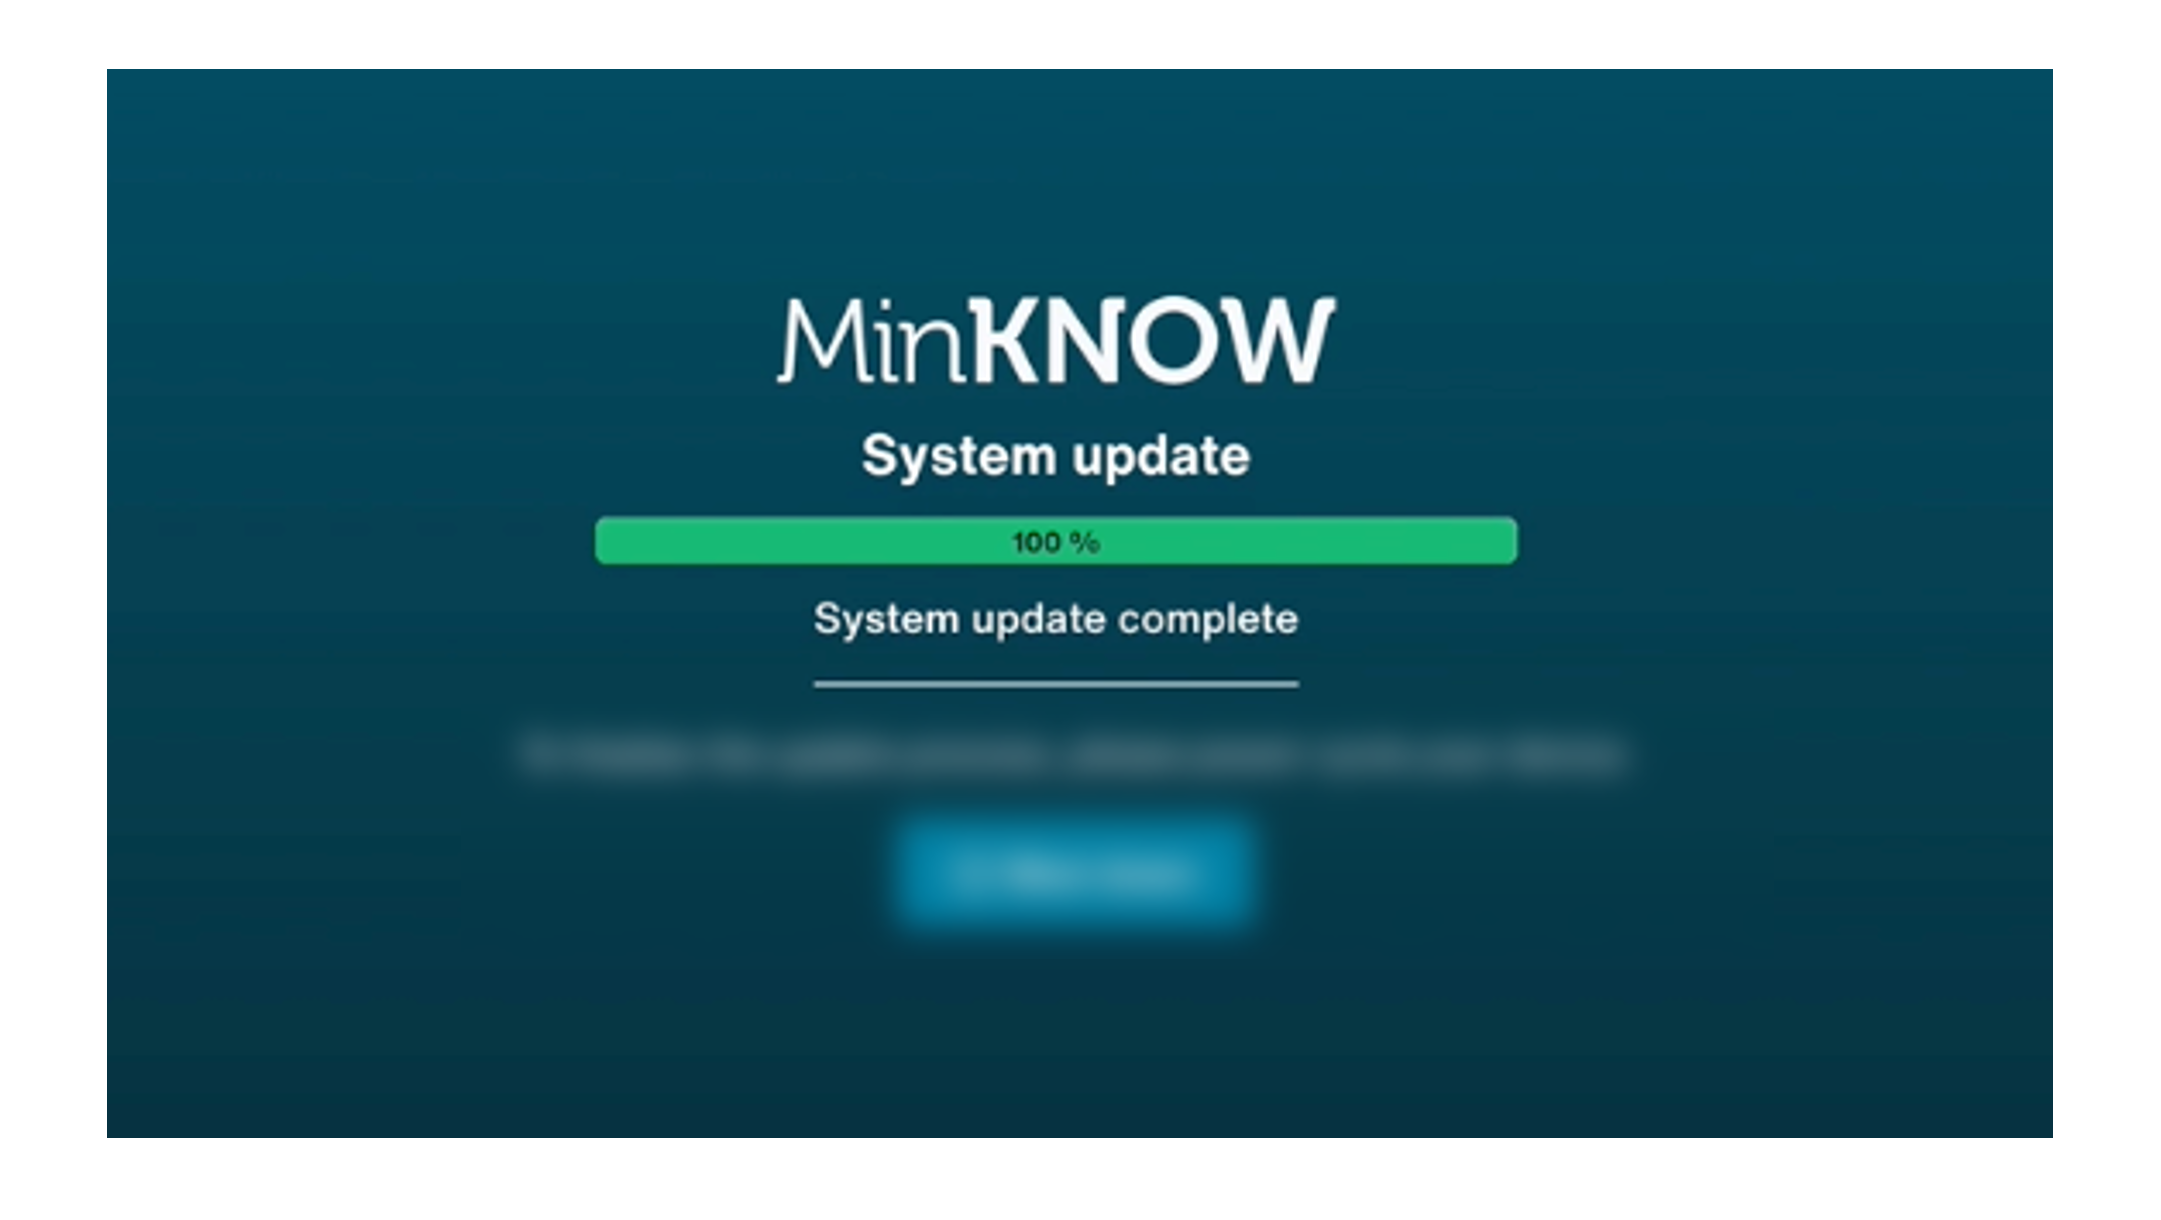 MinKNOW system update progress